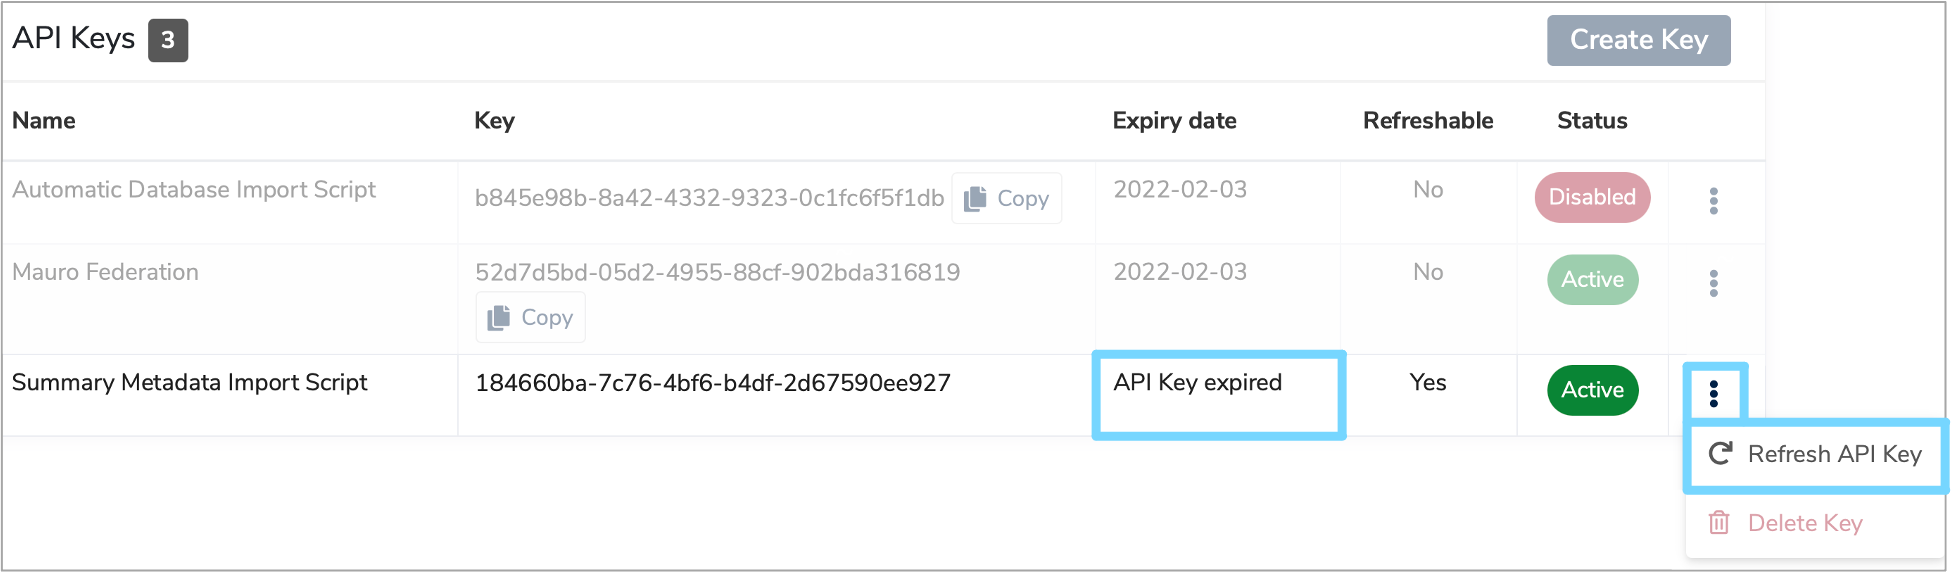 Refreshing an expired API key